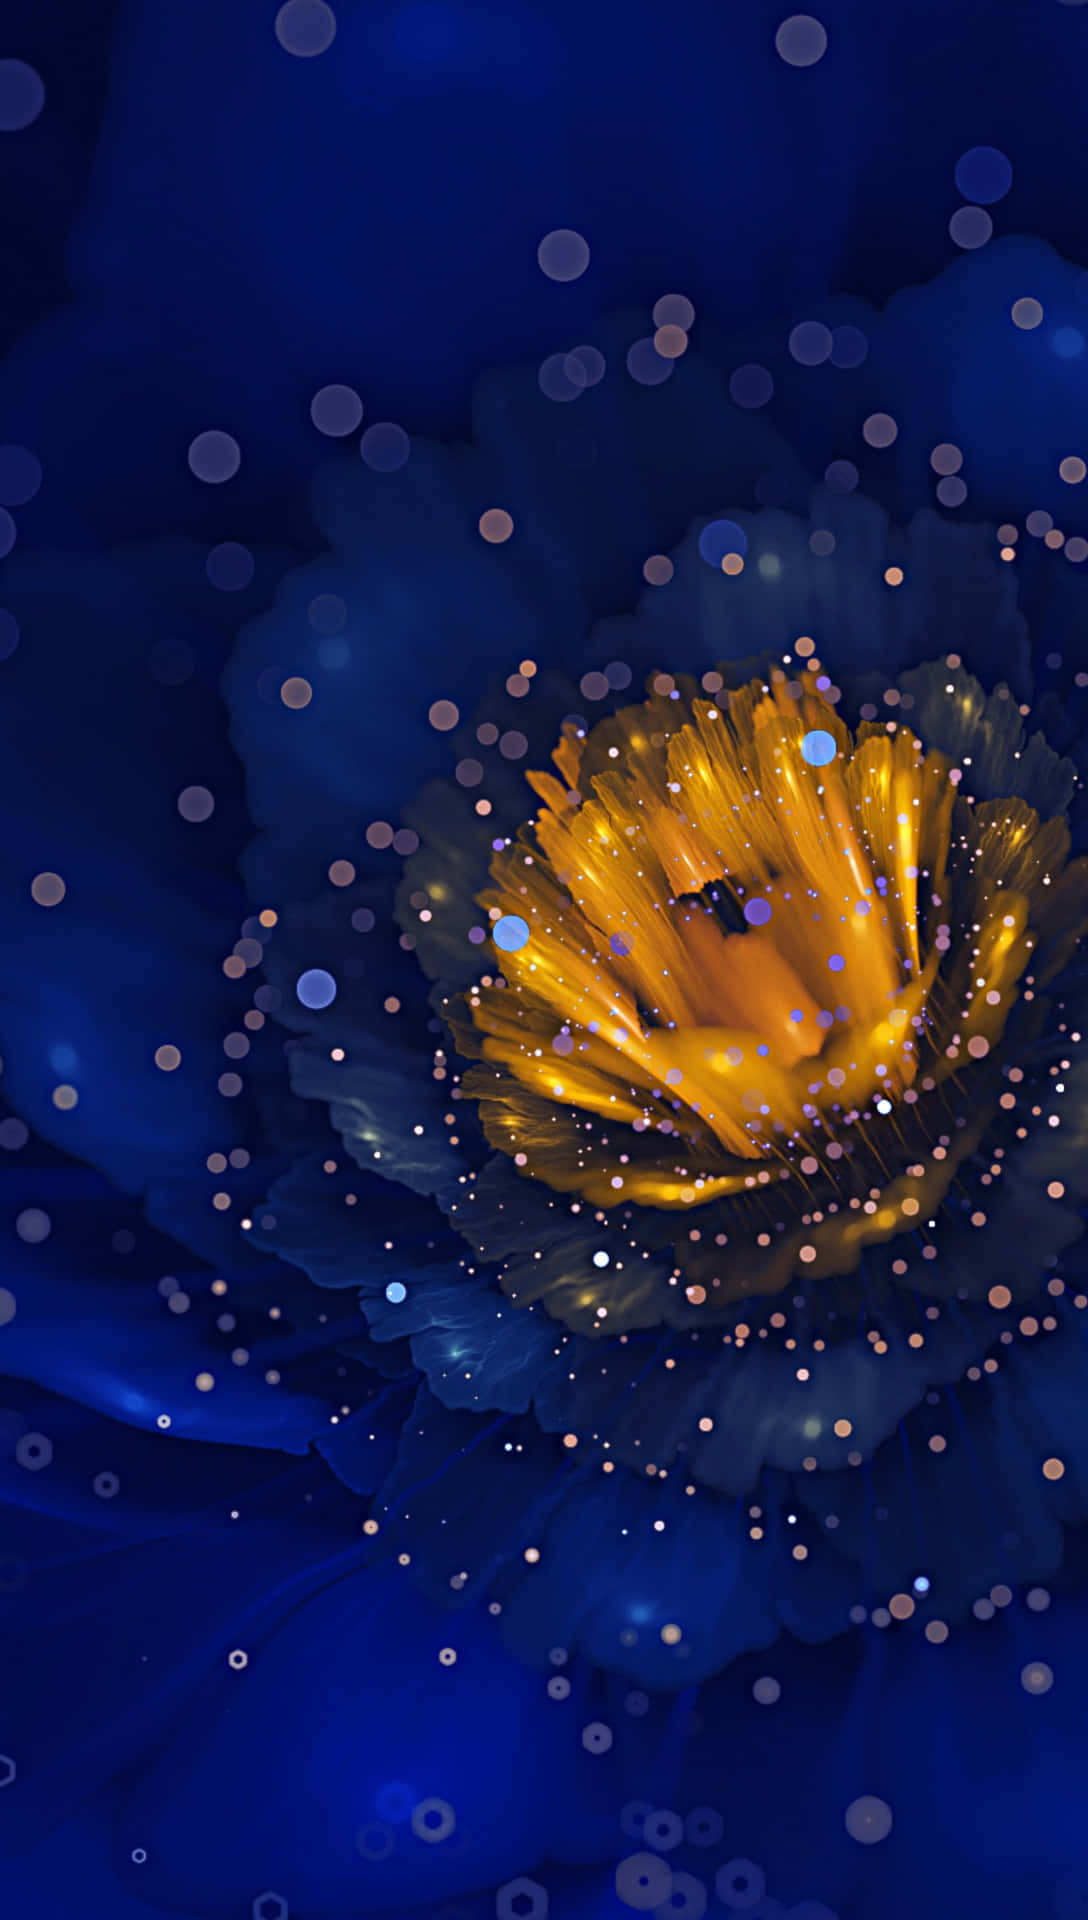 Digital Dazzling Blue Flower Picture